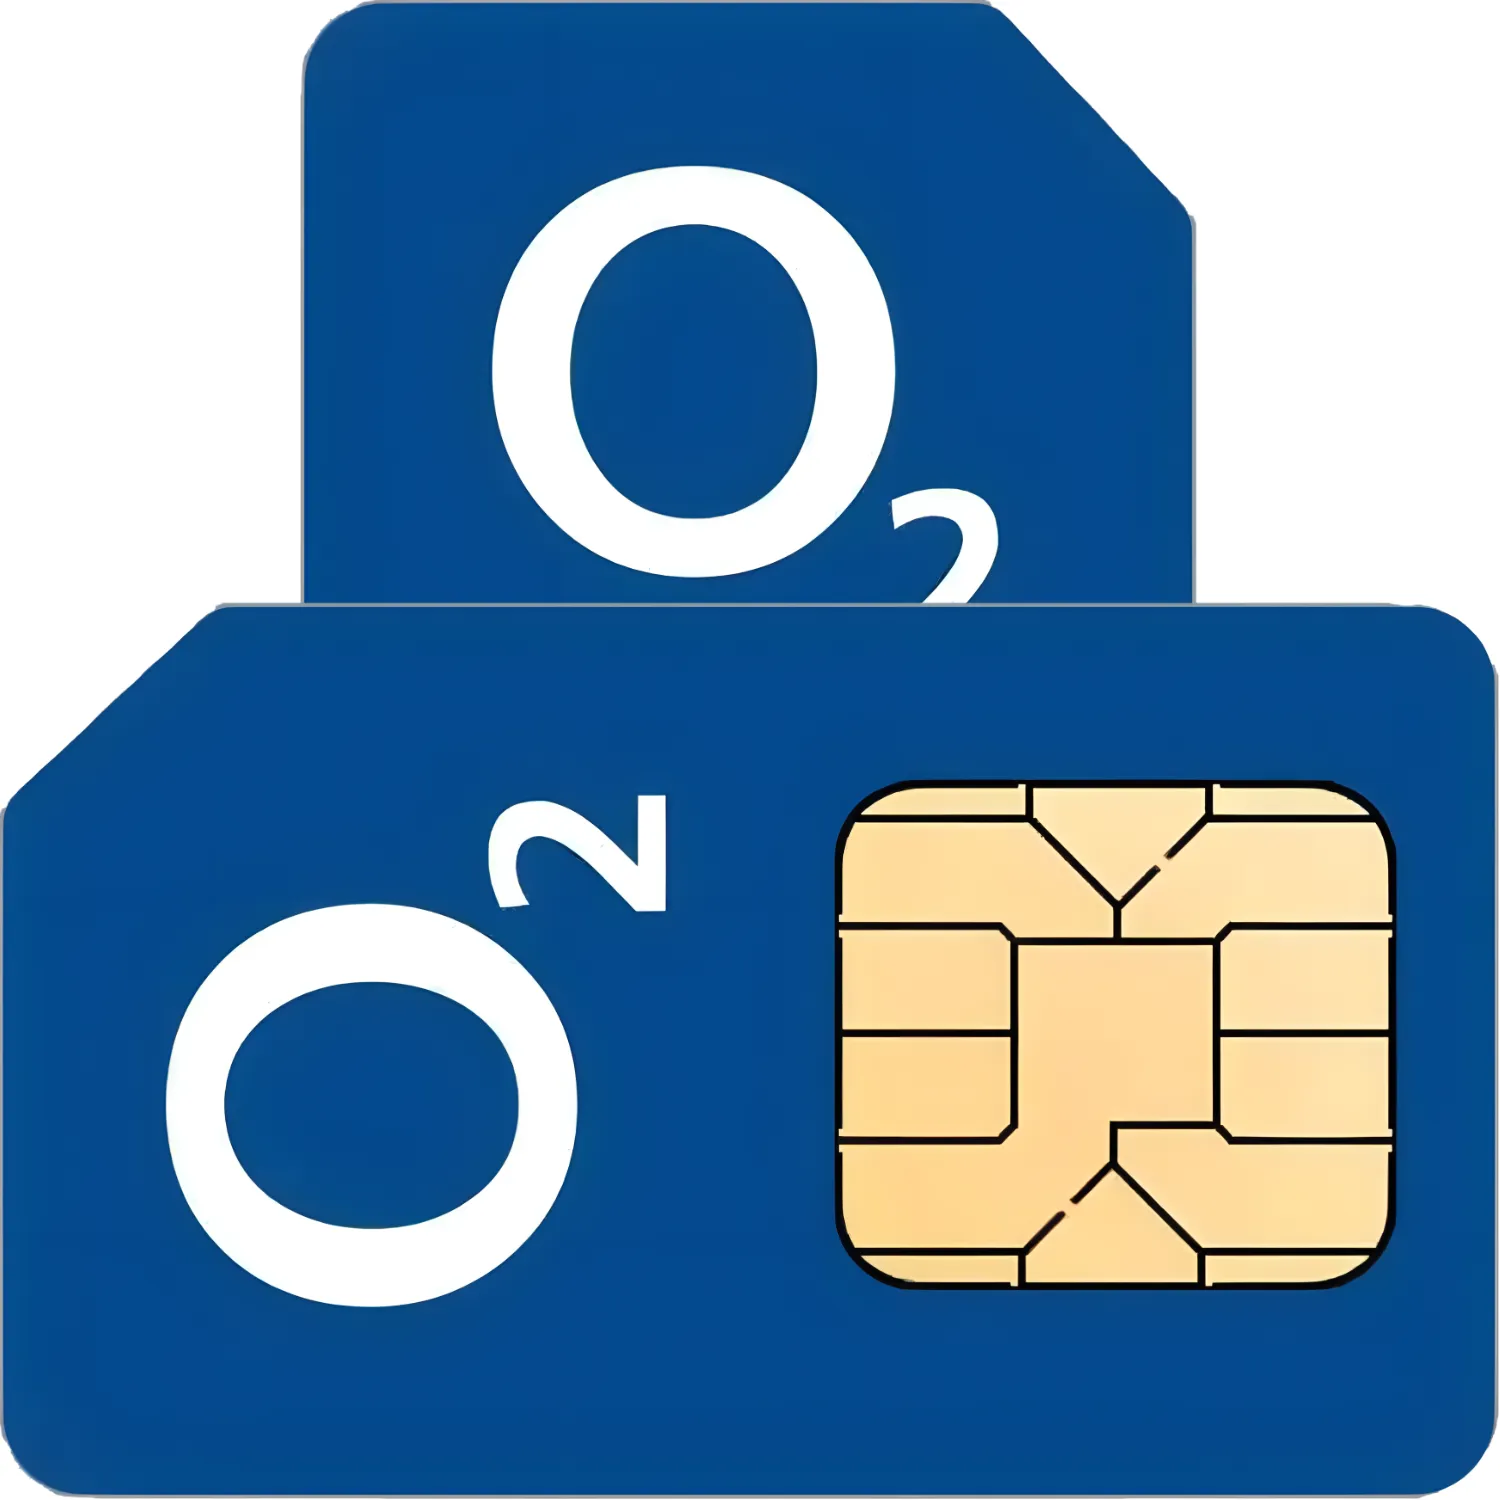 Free O2 SIM Card + £10 Free Credit + Triple Data